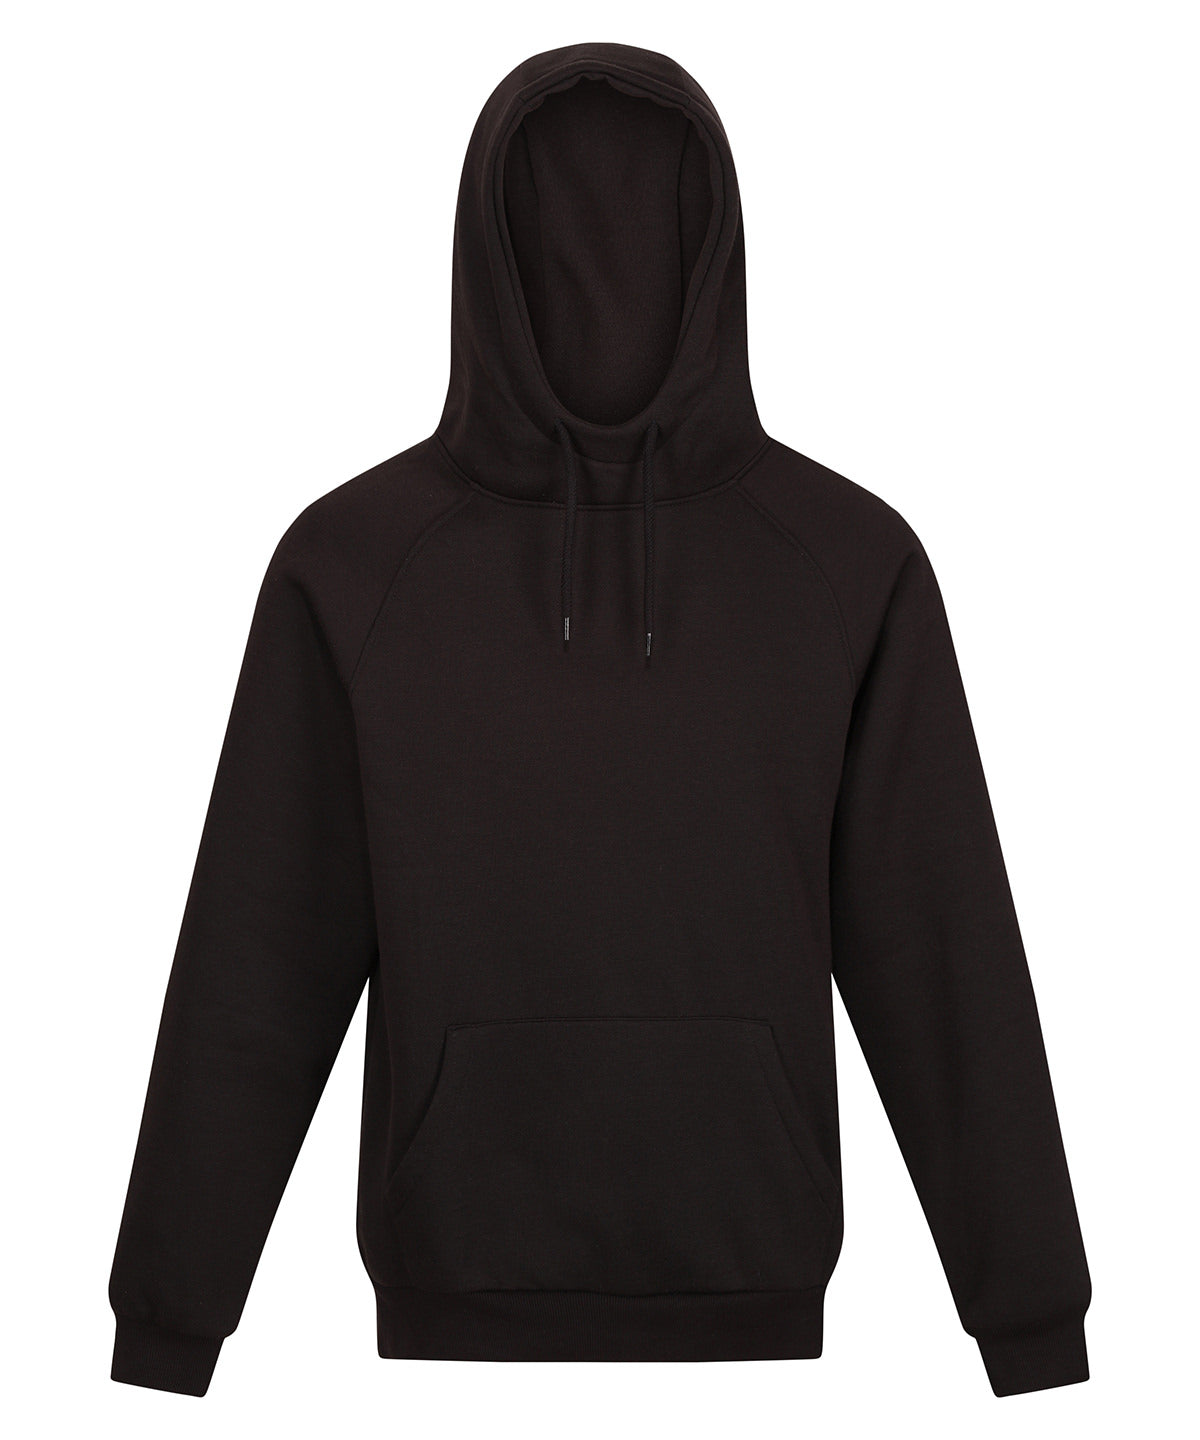 Pro overhead hoodie | Black